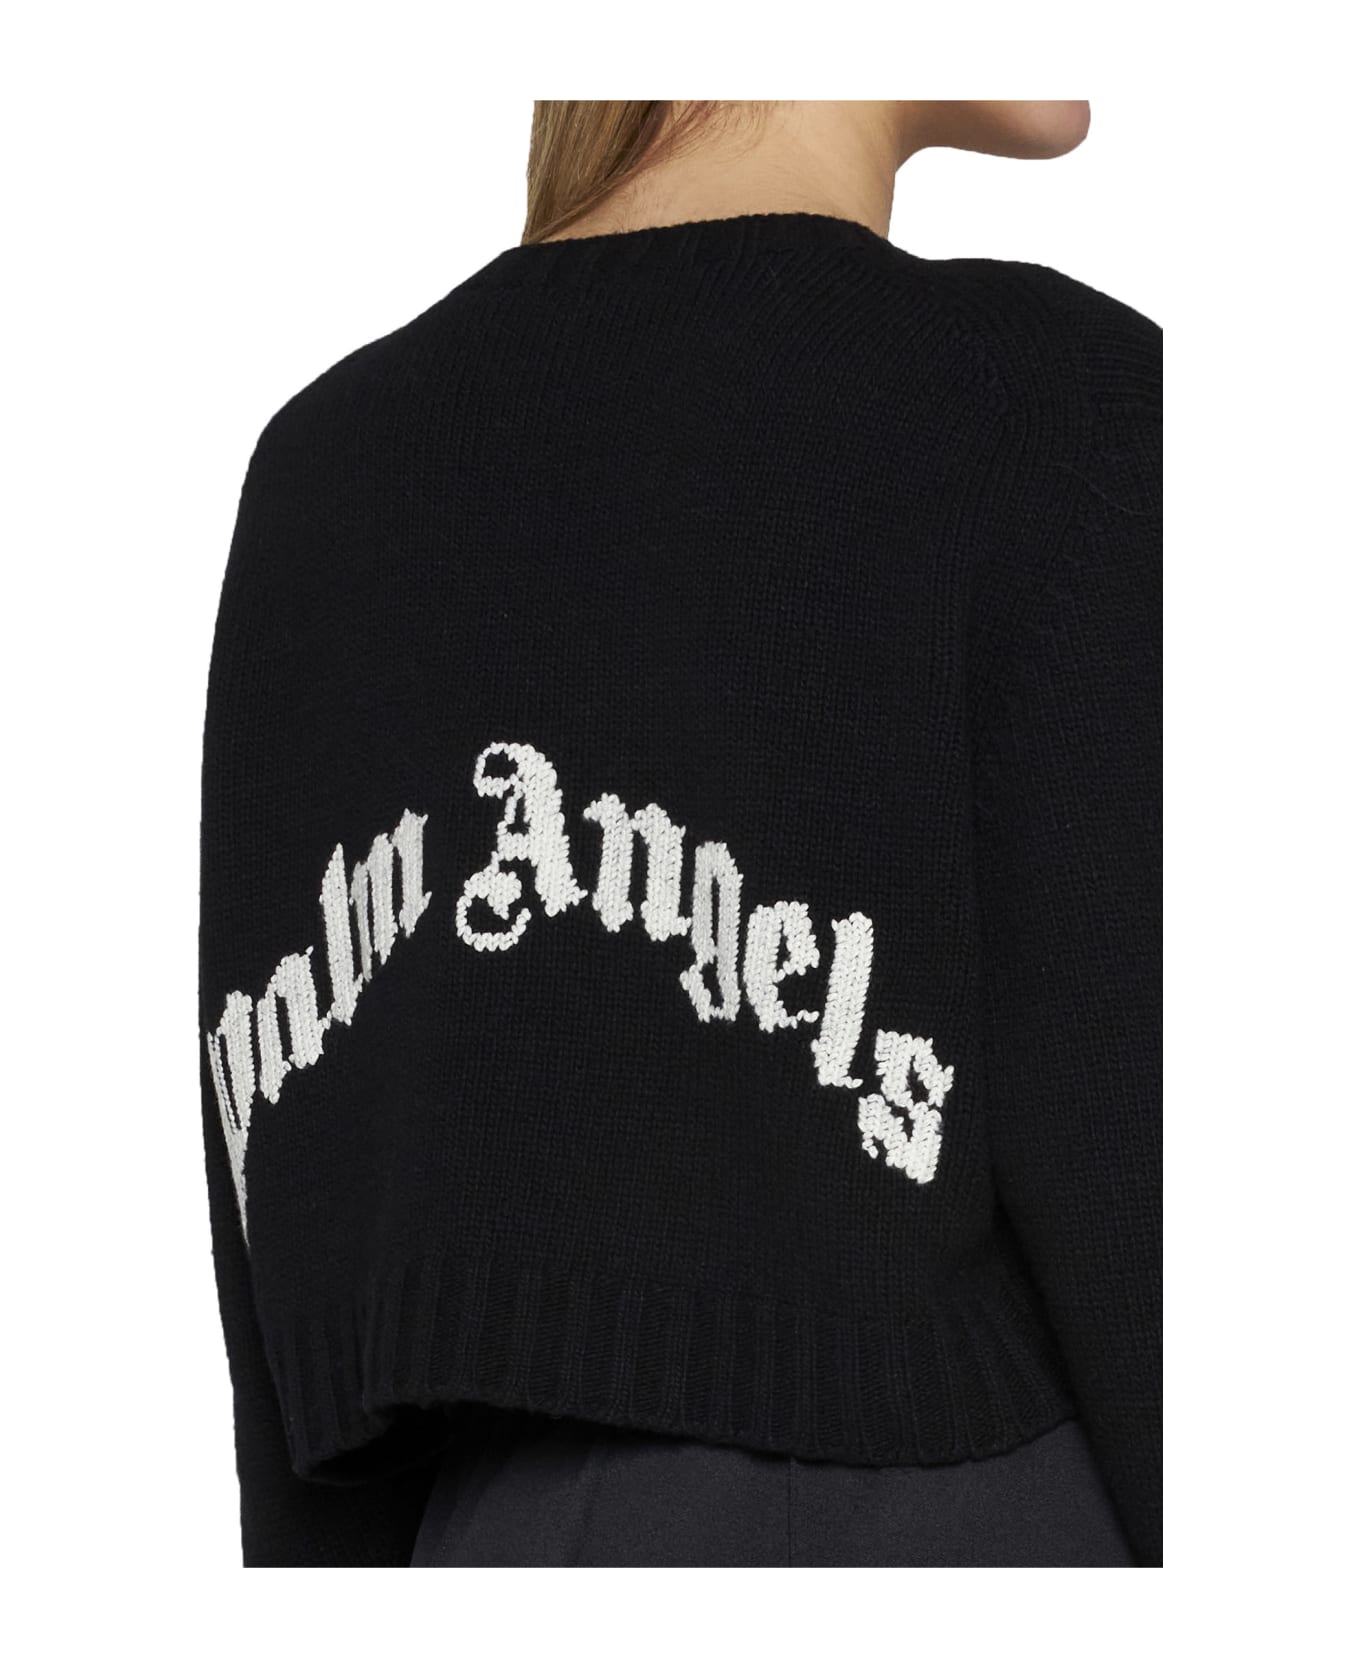 Palm Angels Sweater - Nero e Bianco